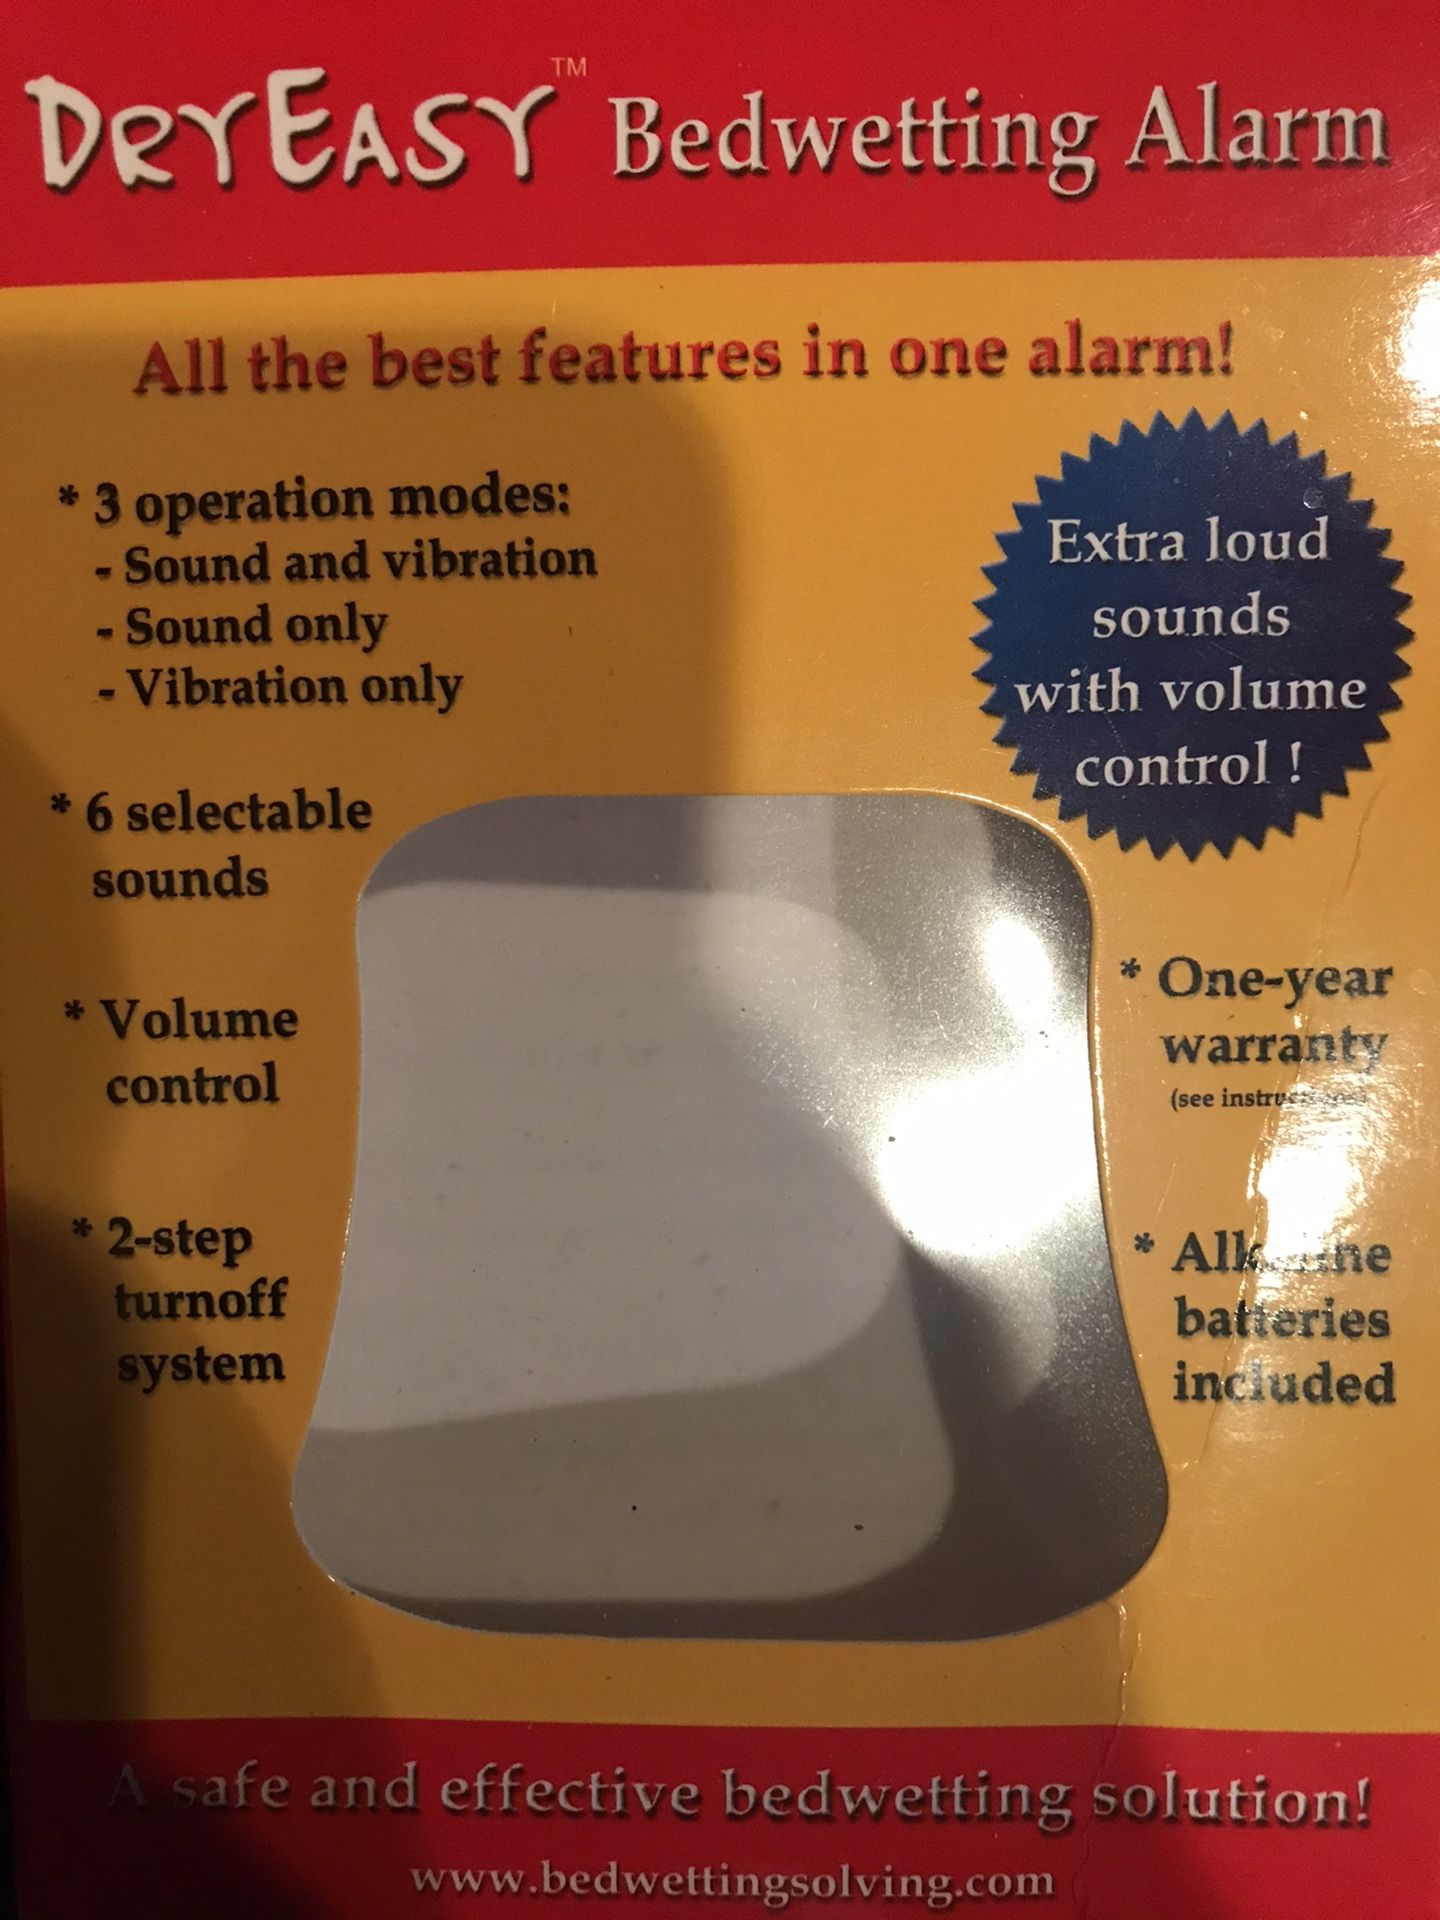 DryEasy Bedwetting Alarm